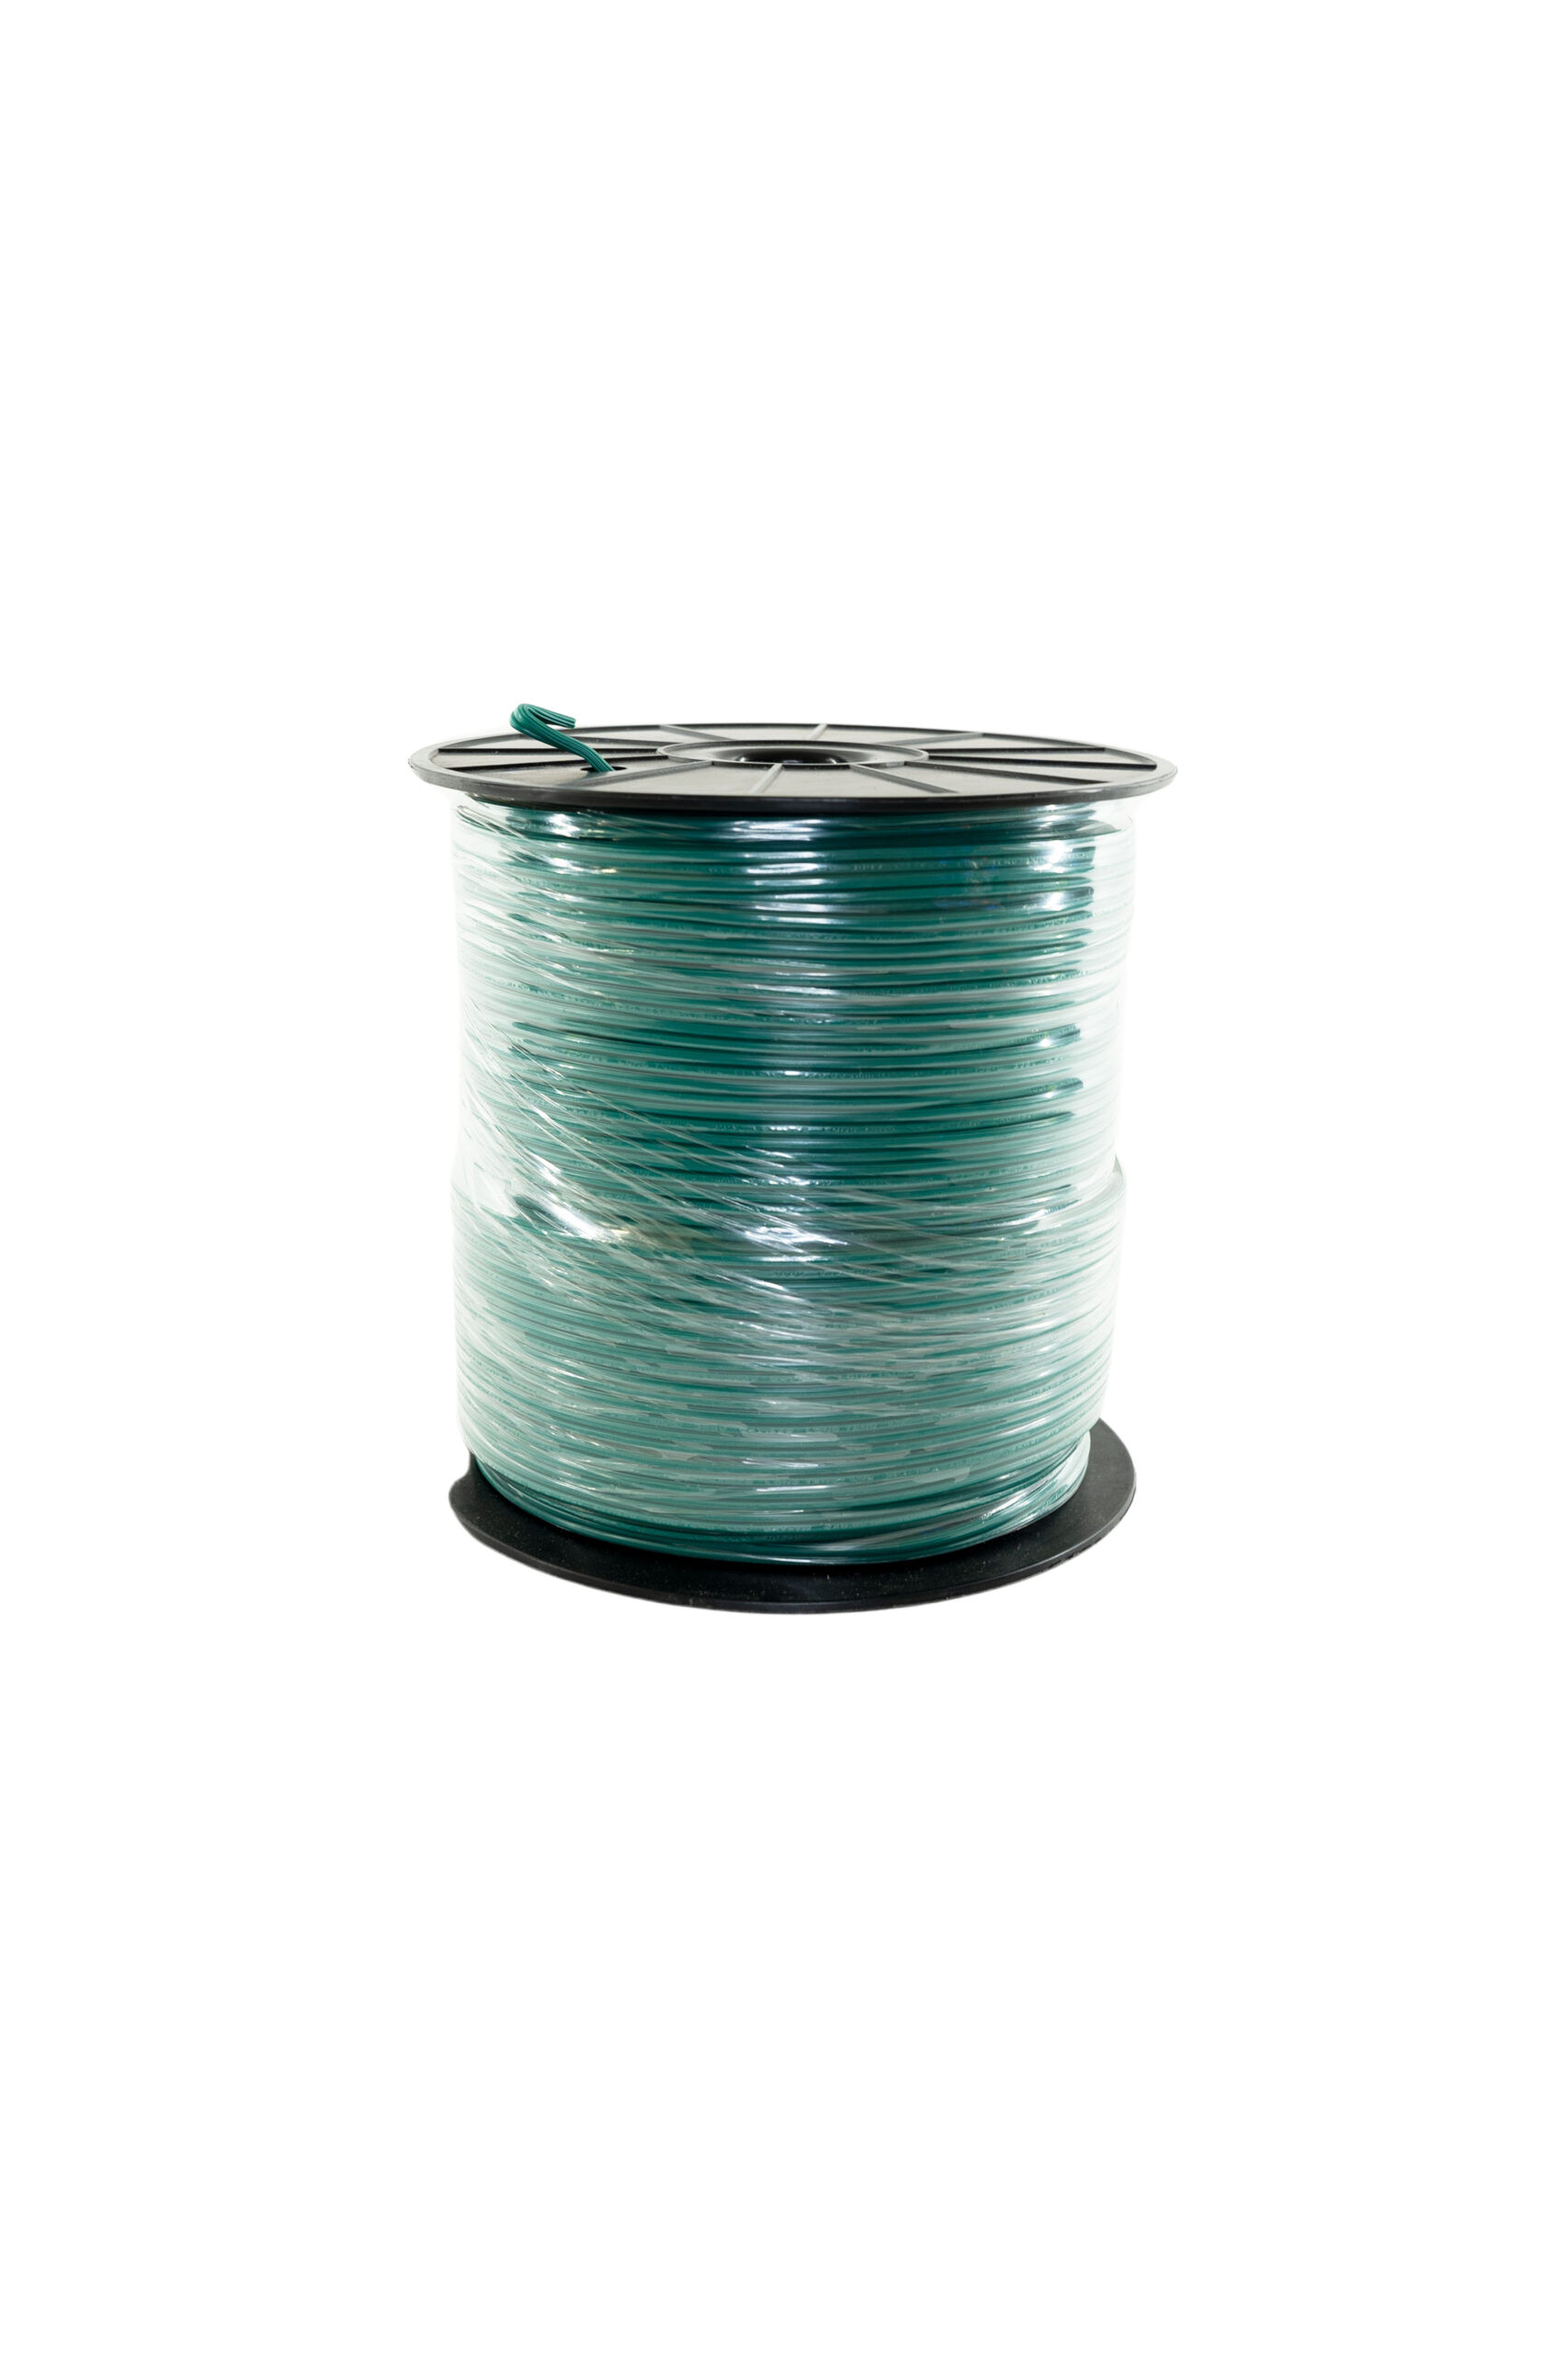 Green Wire 18G 500′ SPT-1 - Lets Get Lit Supply